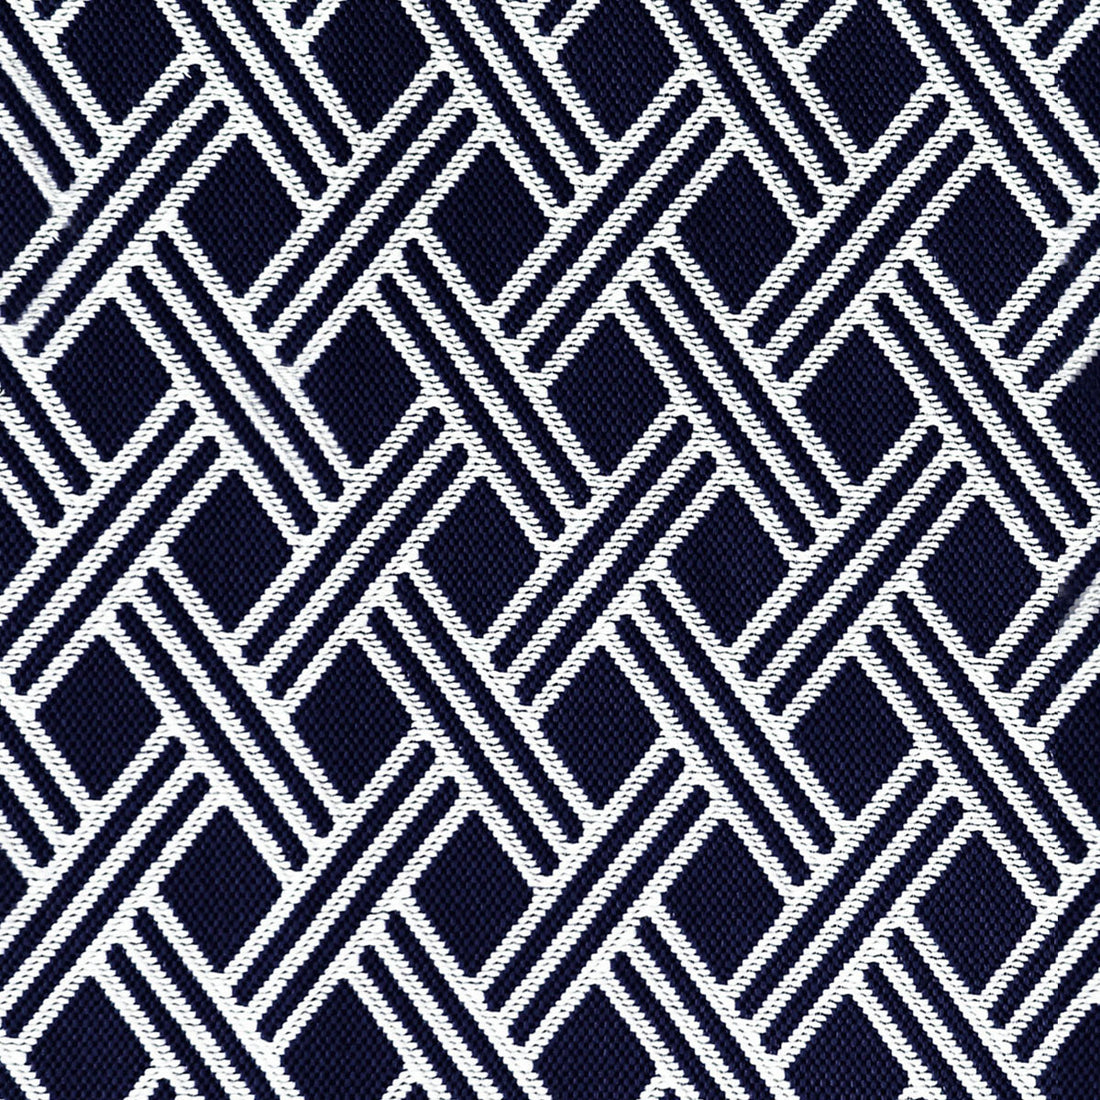 Dorcas fabric in navy color - pattern LCT1060.005.0 - by Gaston y Daniela in the Lorenzo Castillo VI collection